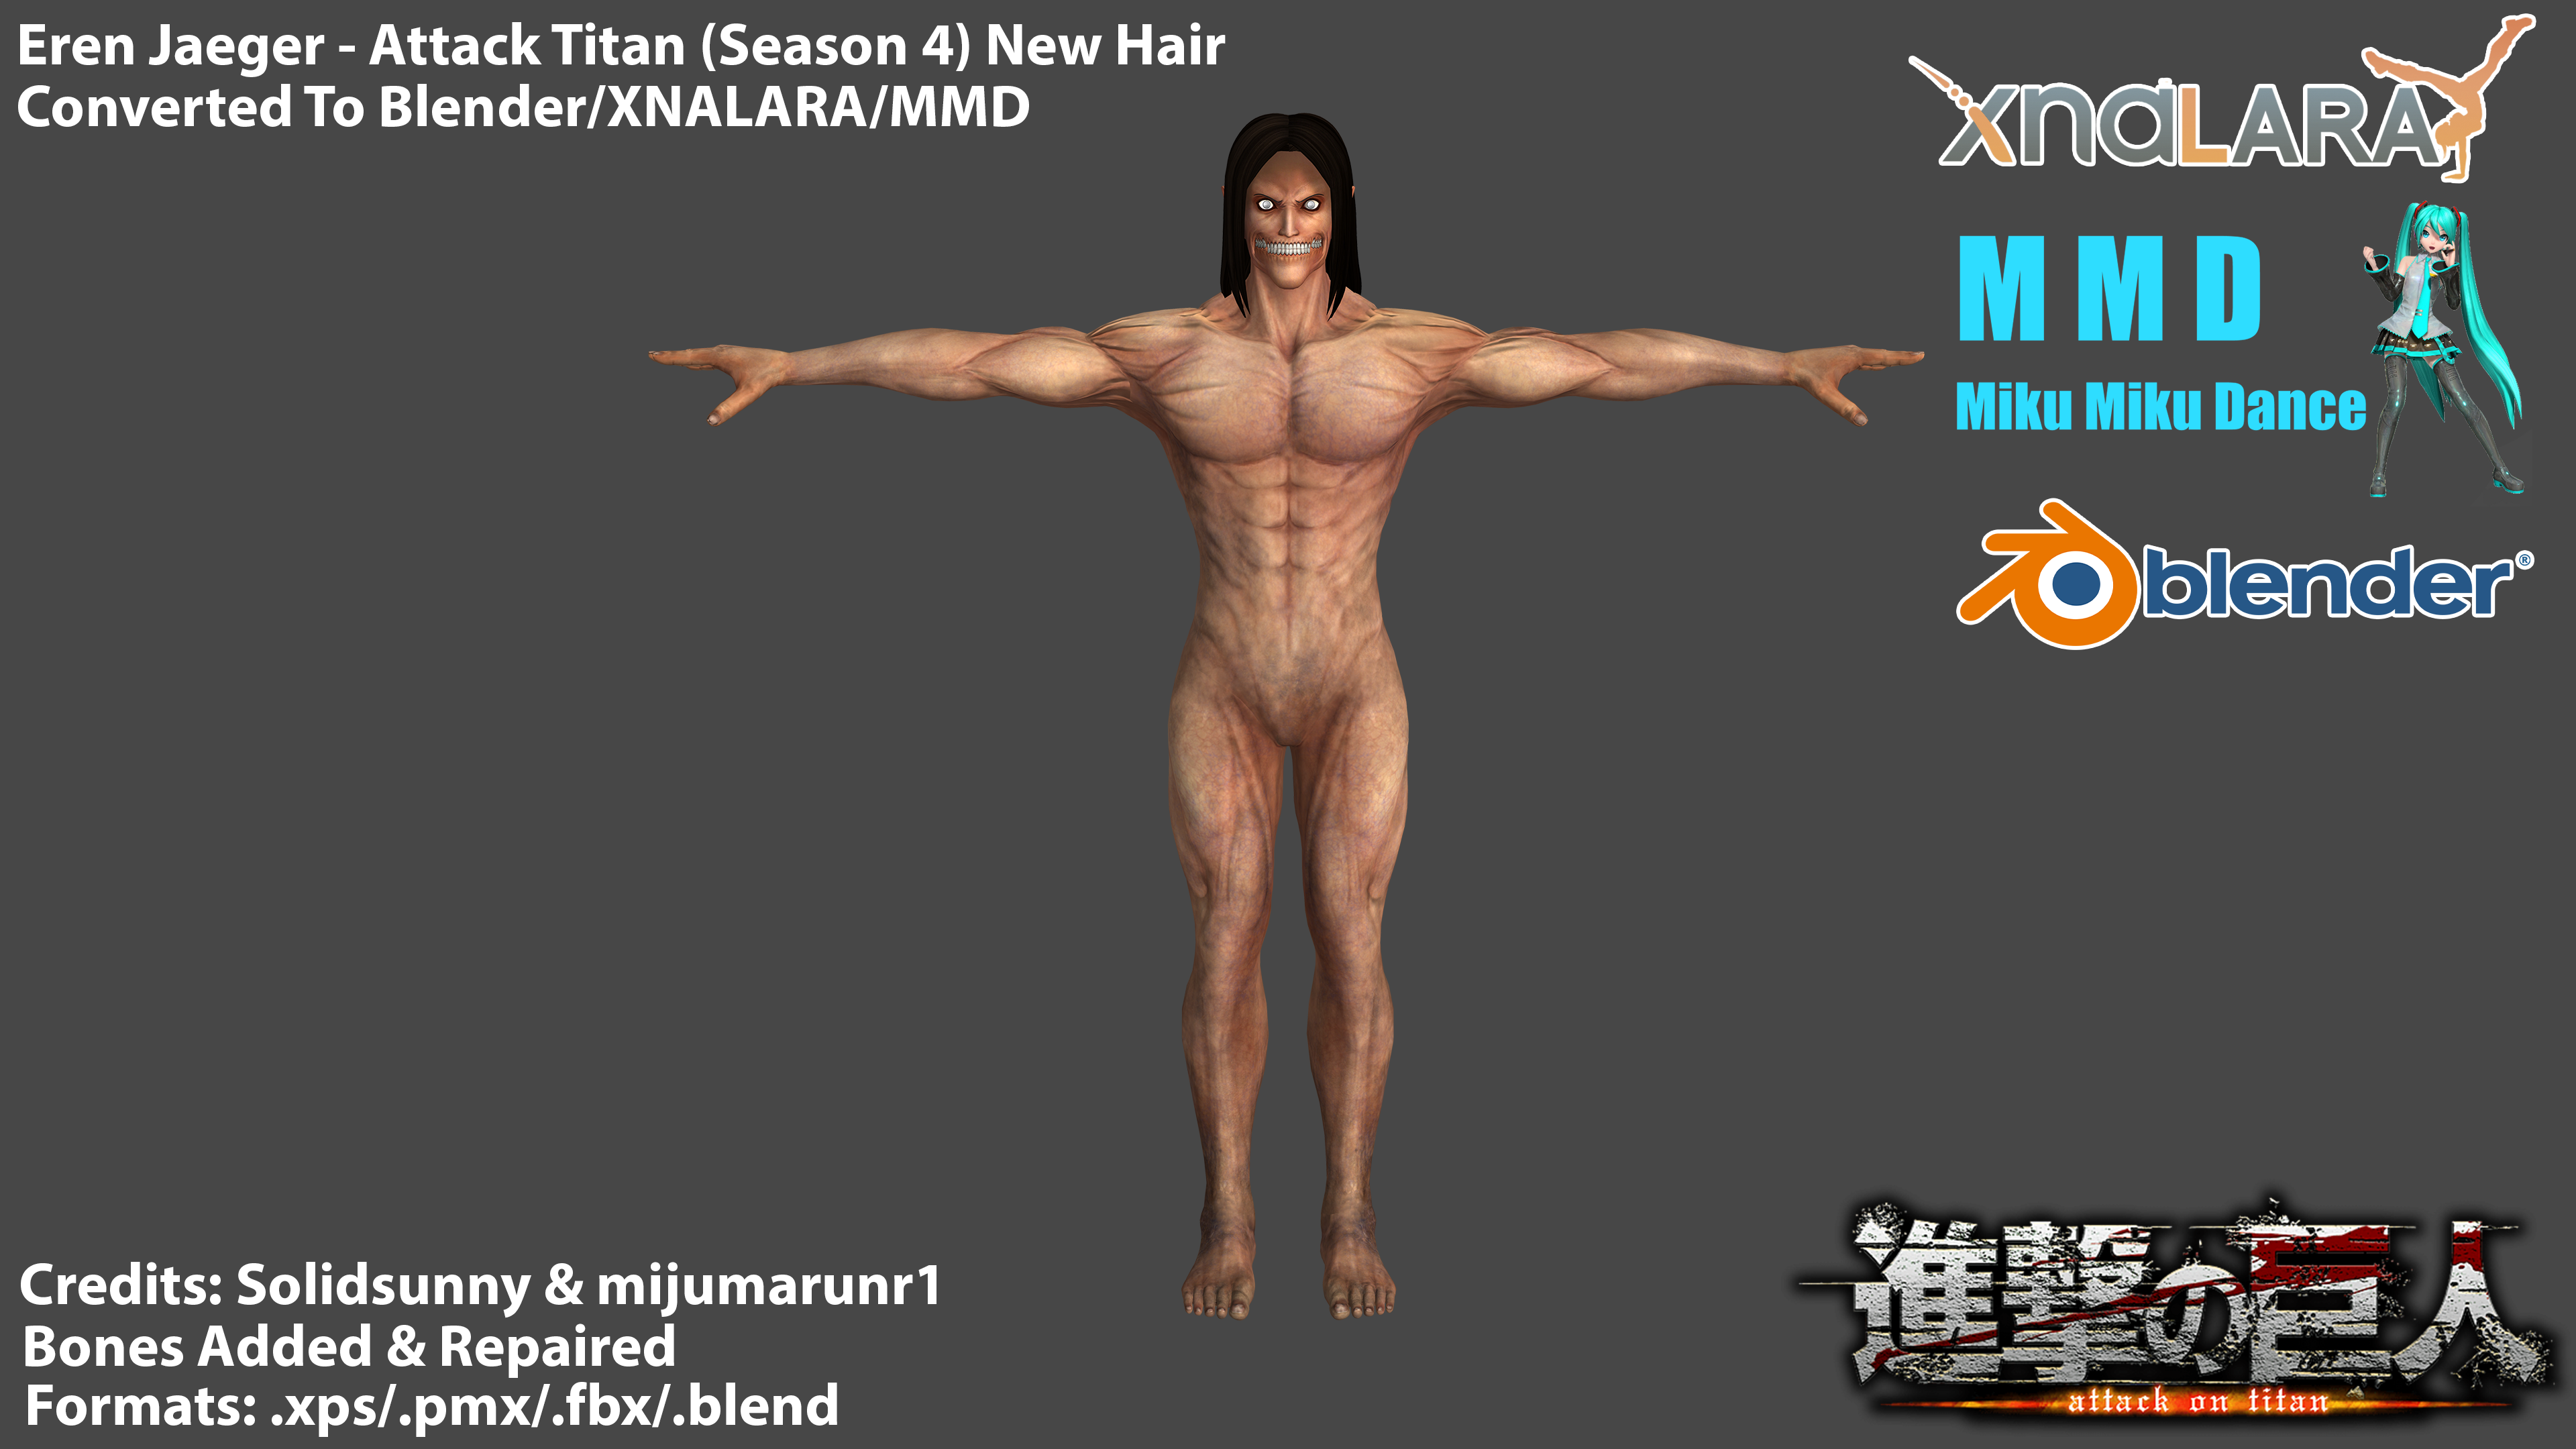 Ver Attack on Titan The Final Season (Online) HD by HiGuys920 on DeviantArt